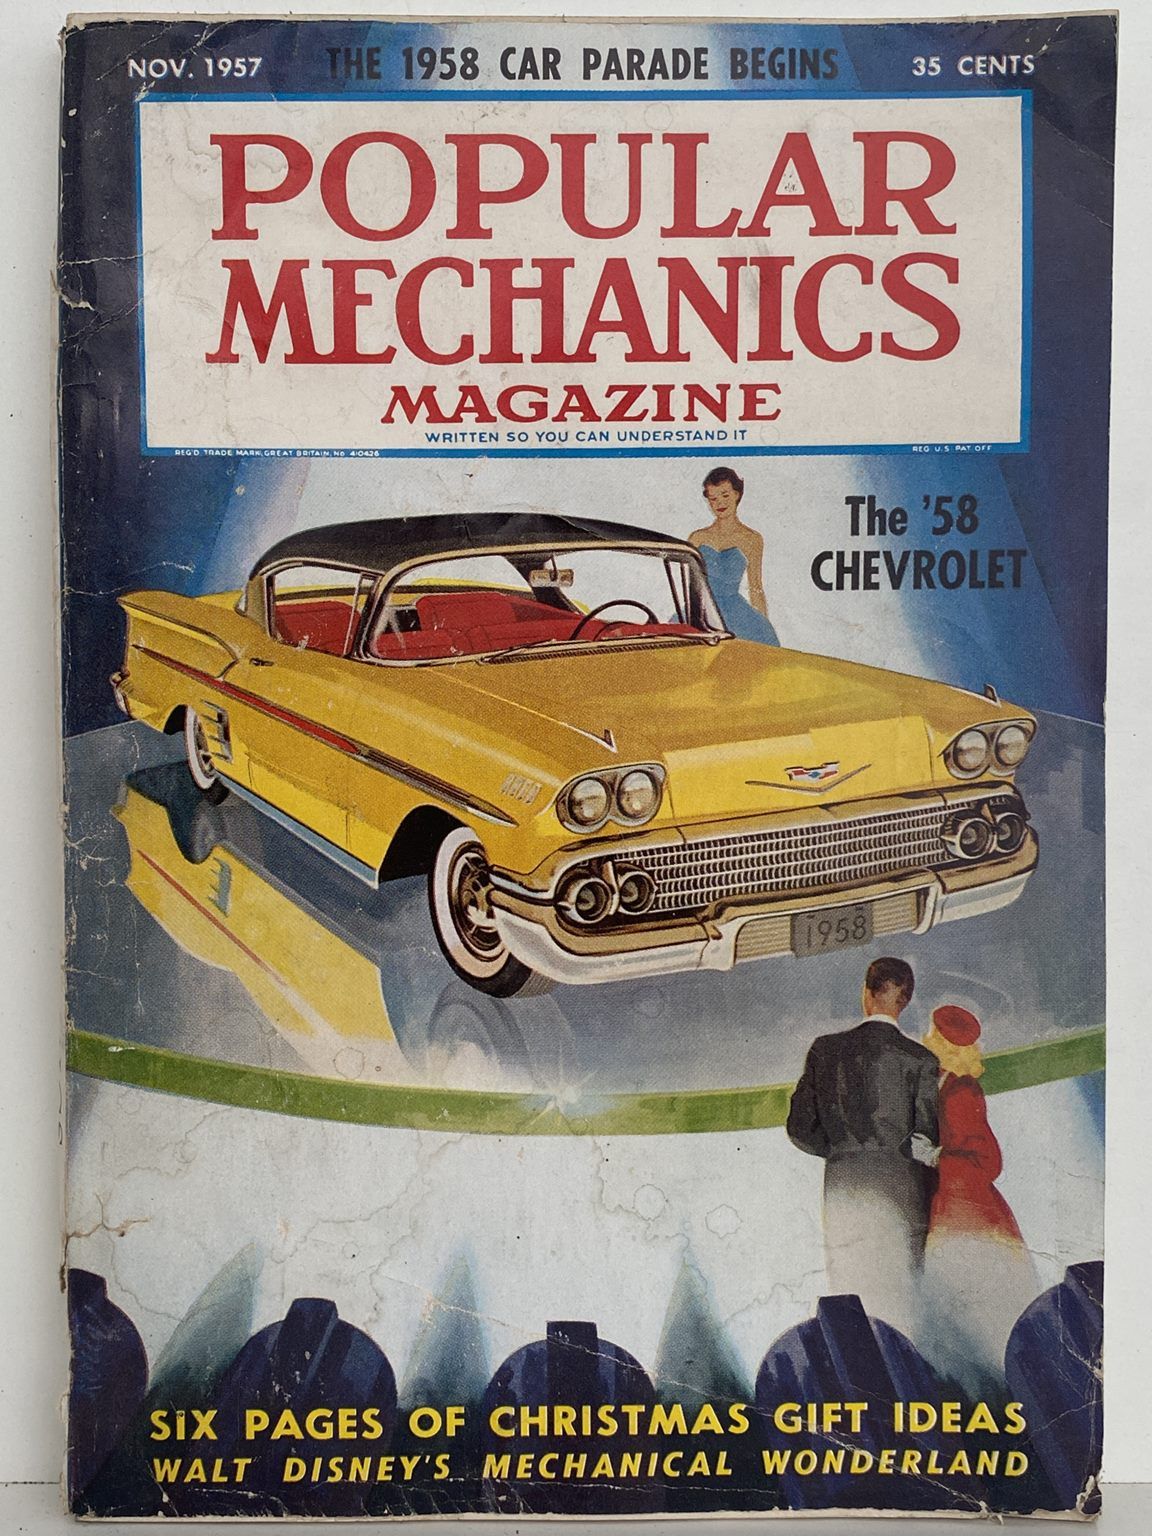 VINTAGE MAGAZINE: Popular Mechanics - Vol. 108, No. 5 - November 1957